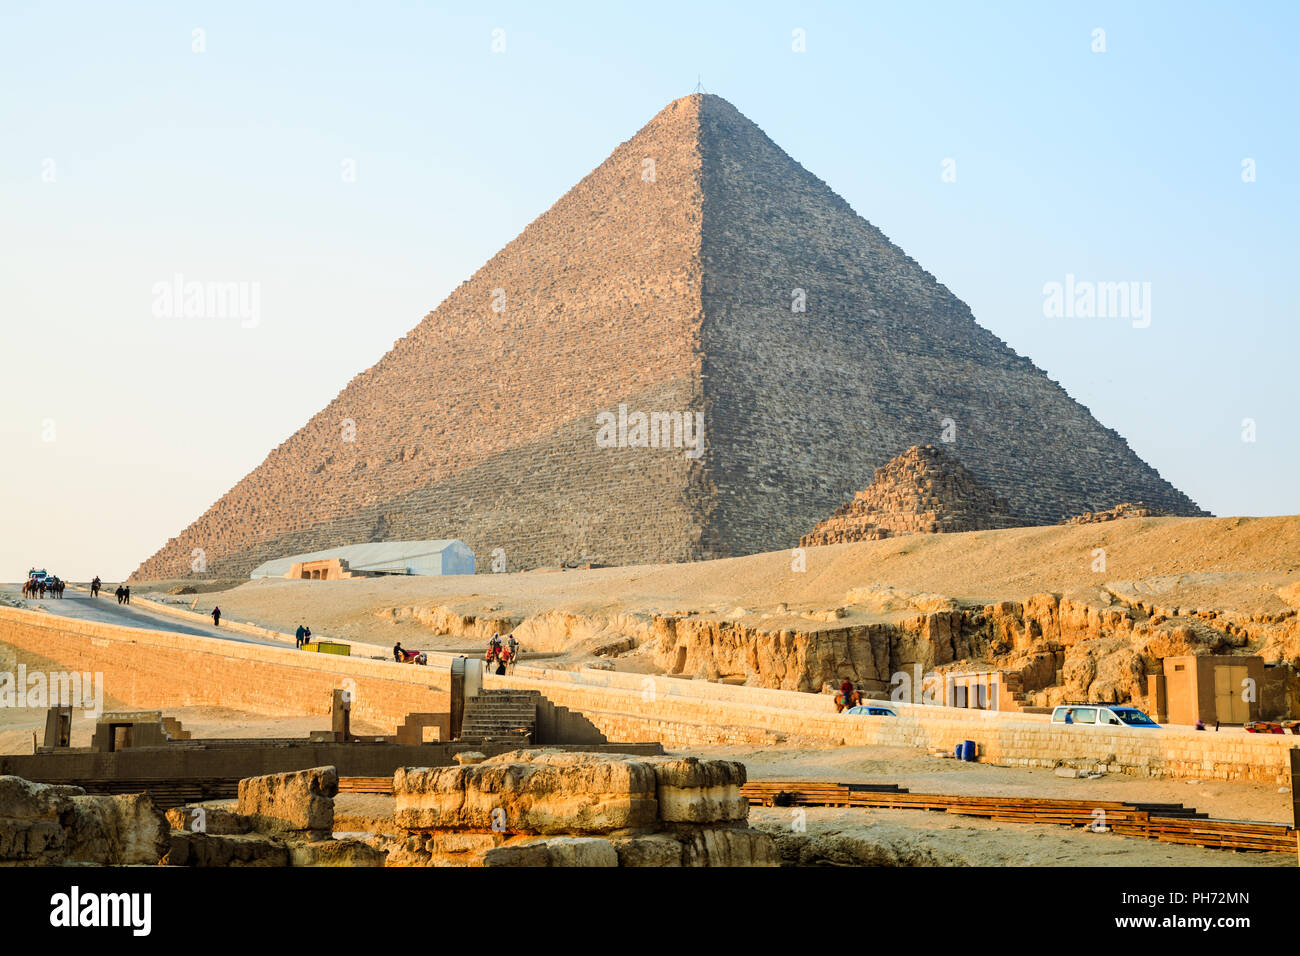 Great pyramid of giza Stock Photo